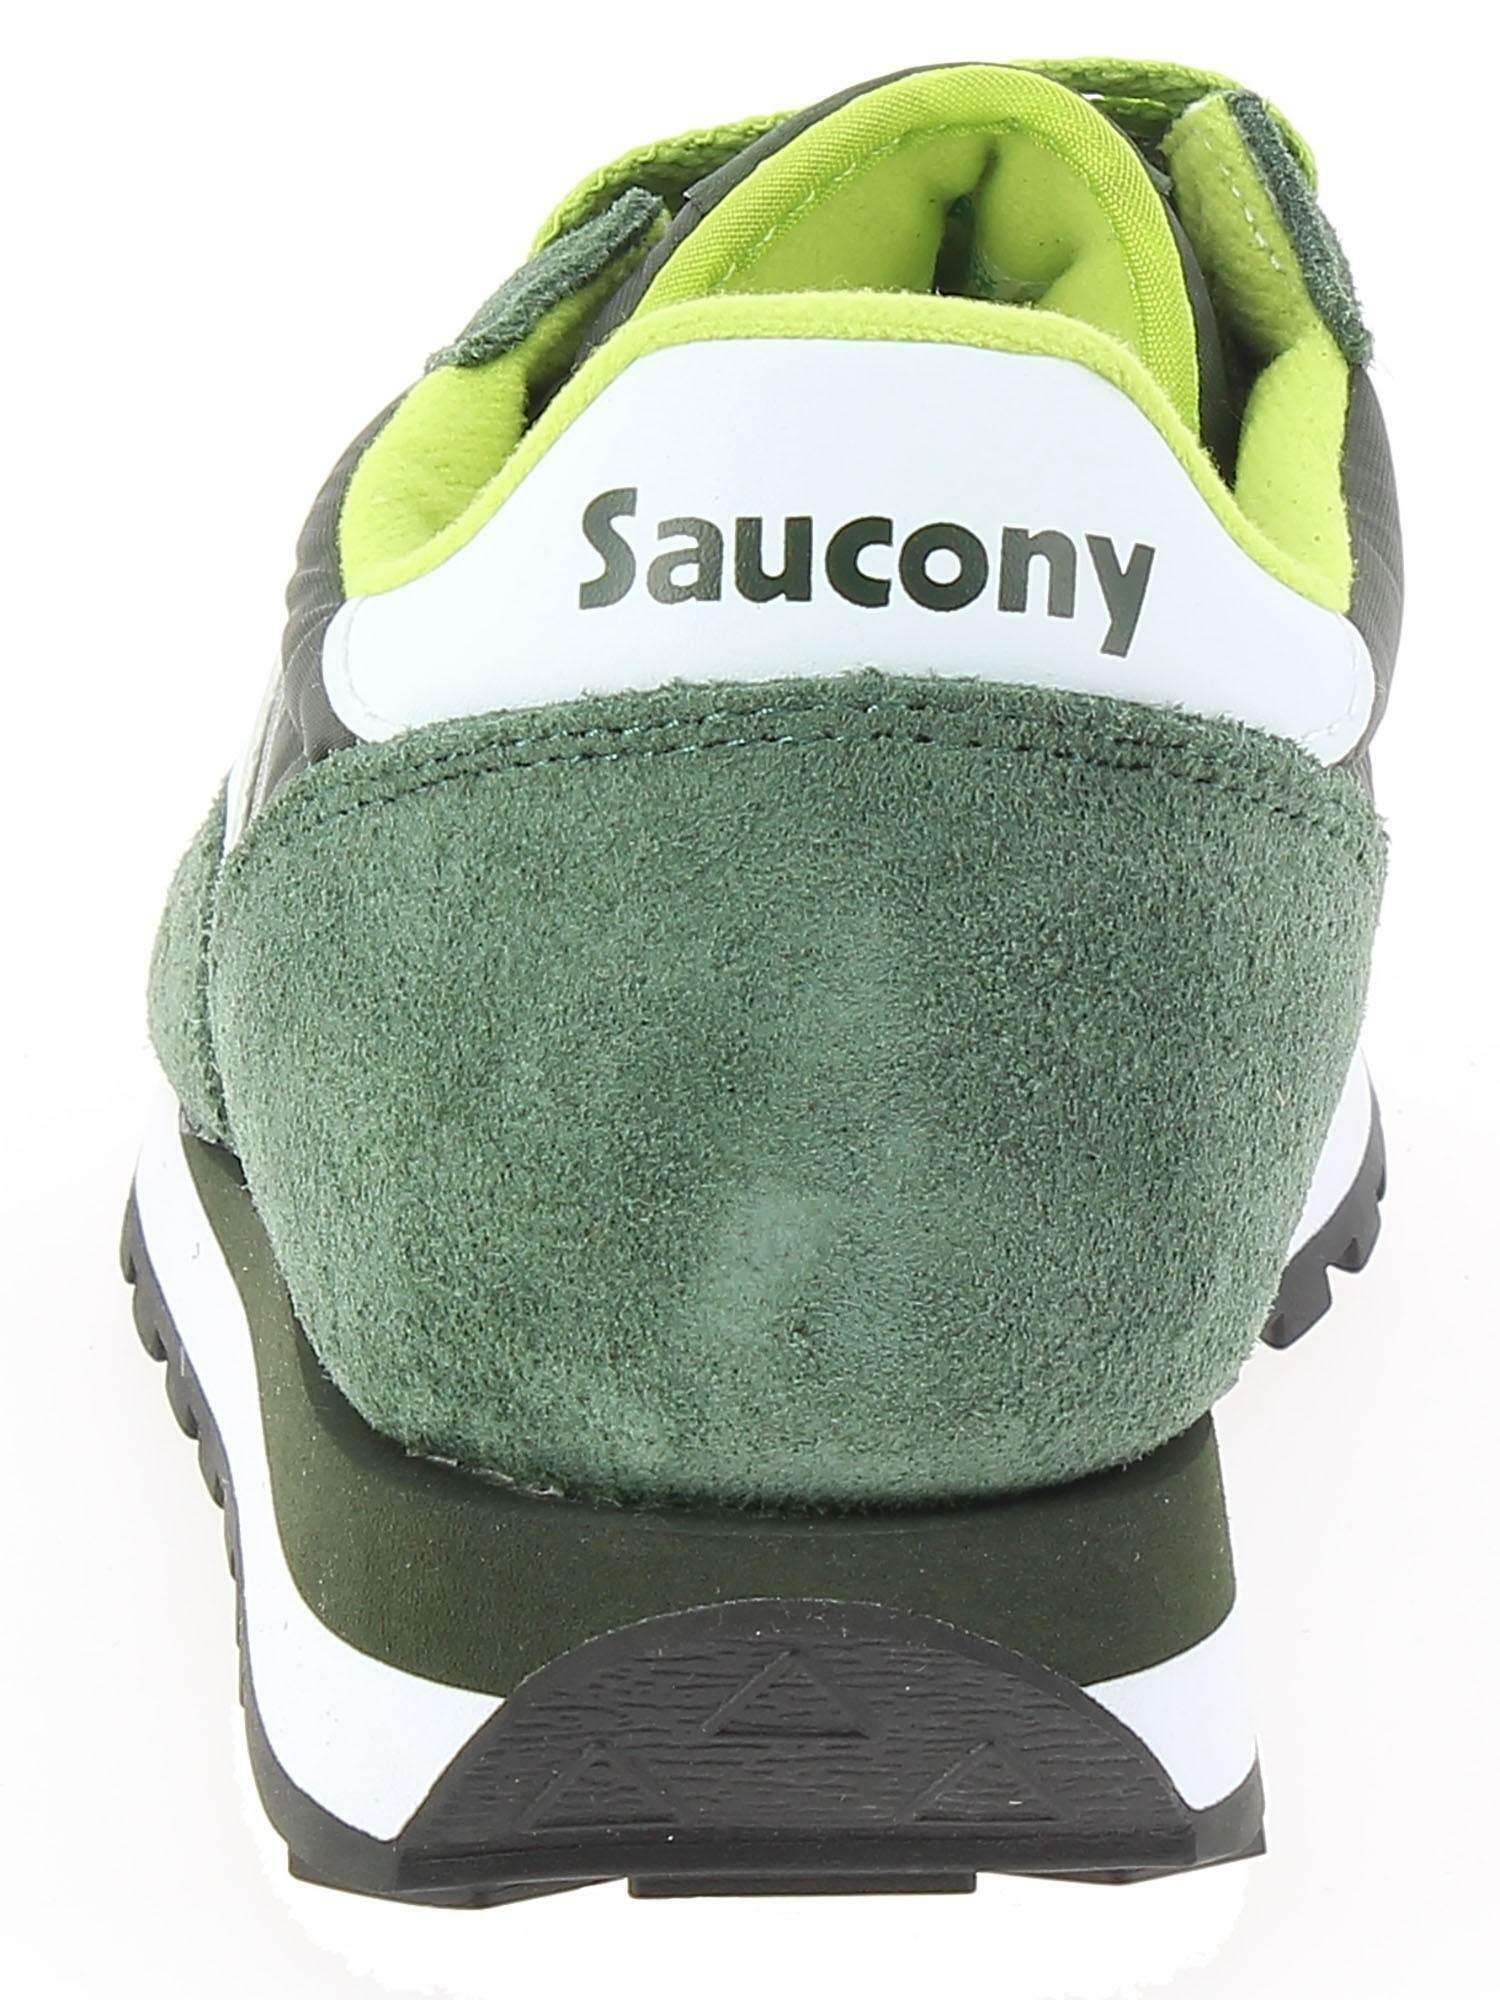 saucony saucony jazz original scarpe sportive uomo verdi 2044275